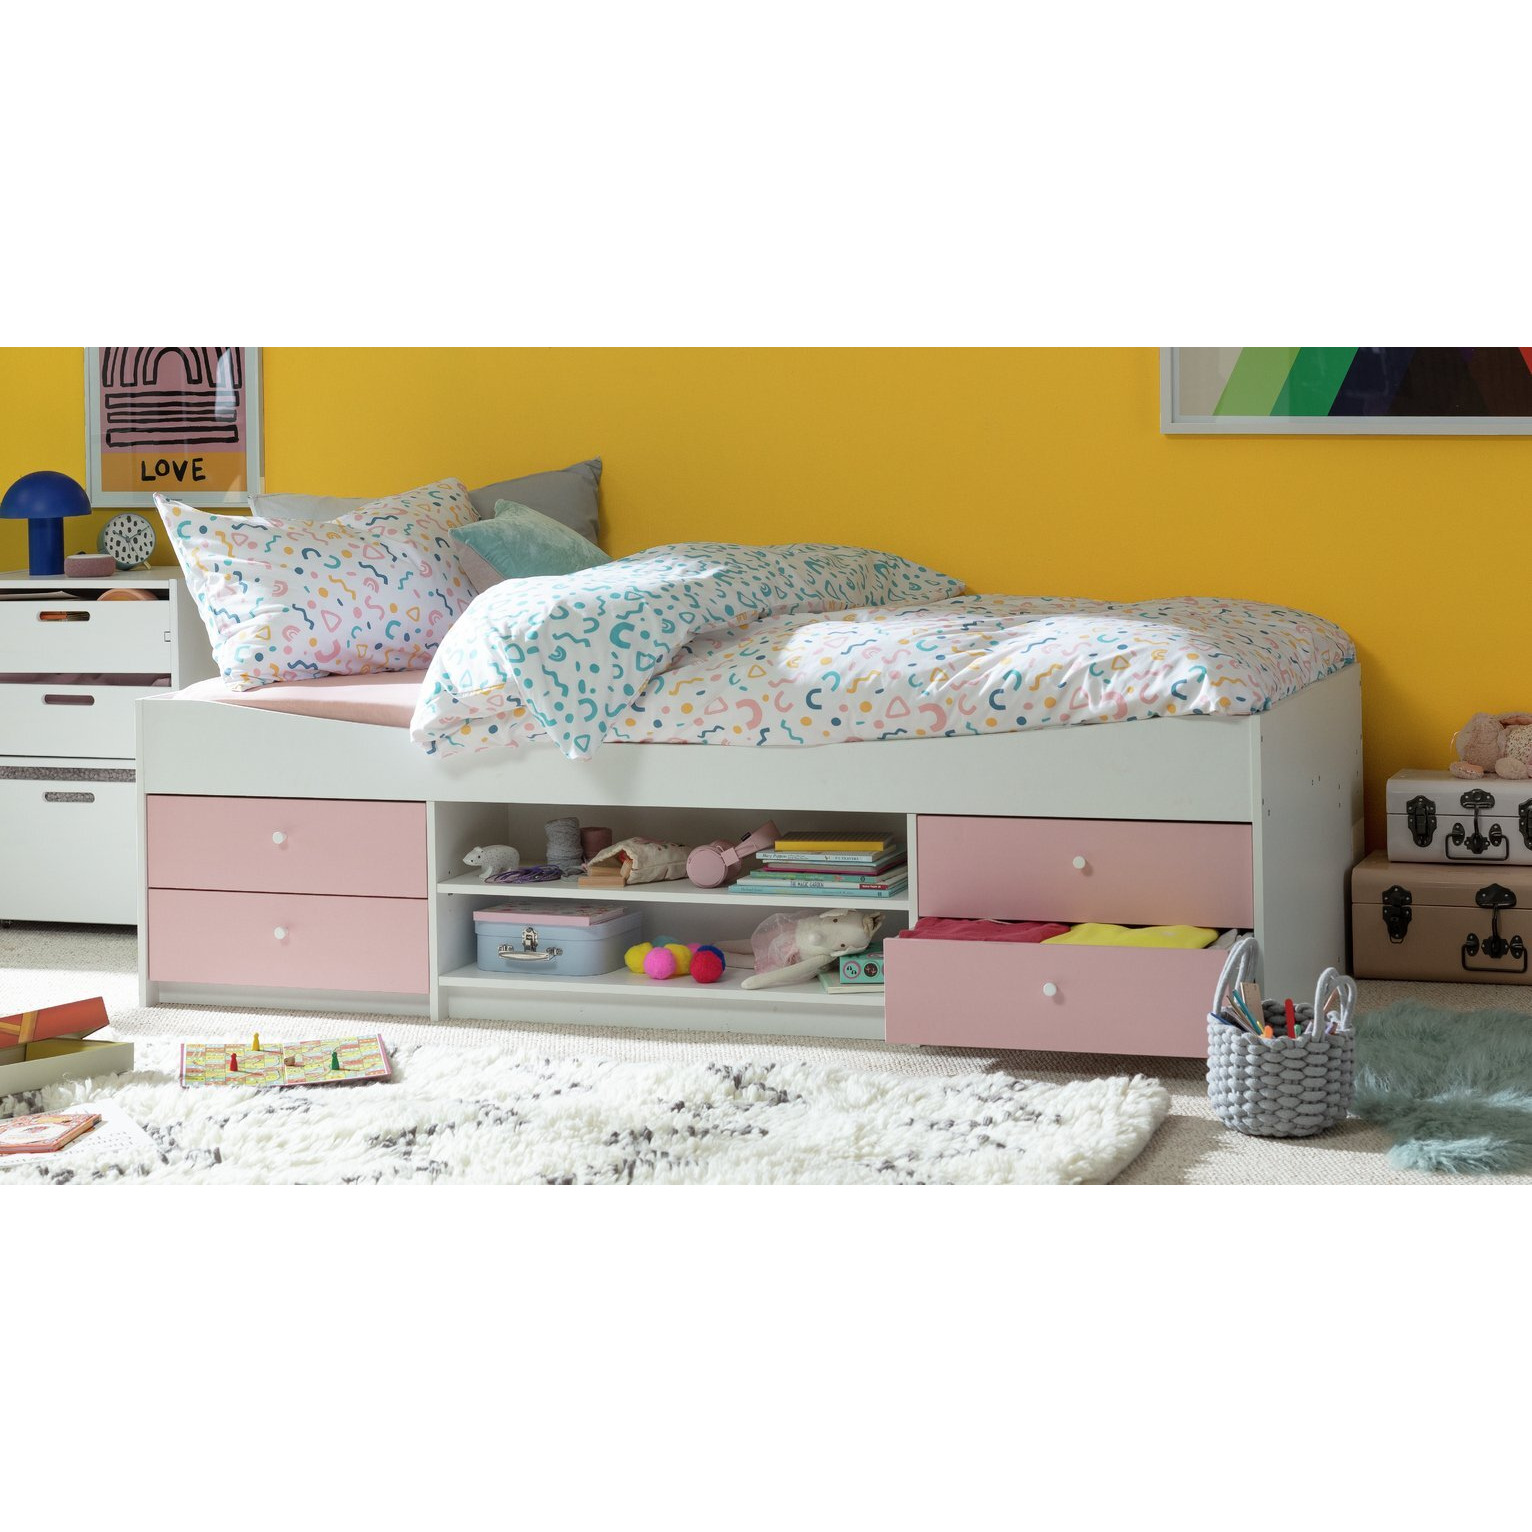 Argos Home Malibu Cabin Bed and Mattress - Pink & White - image 1